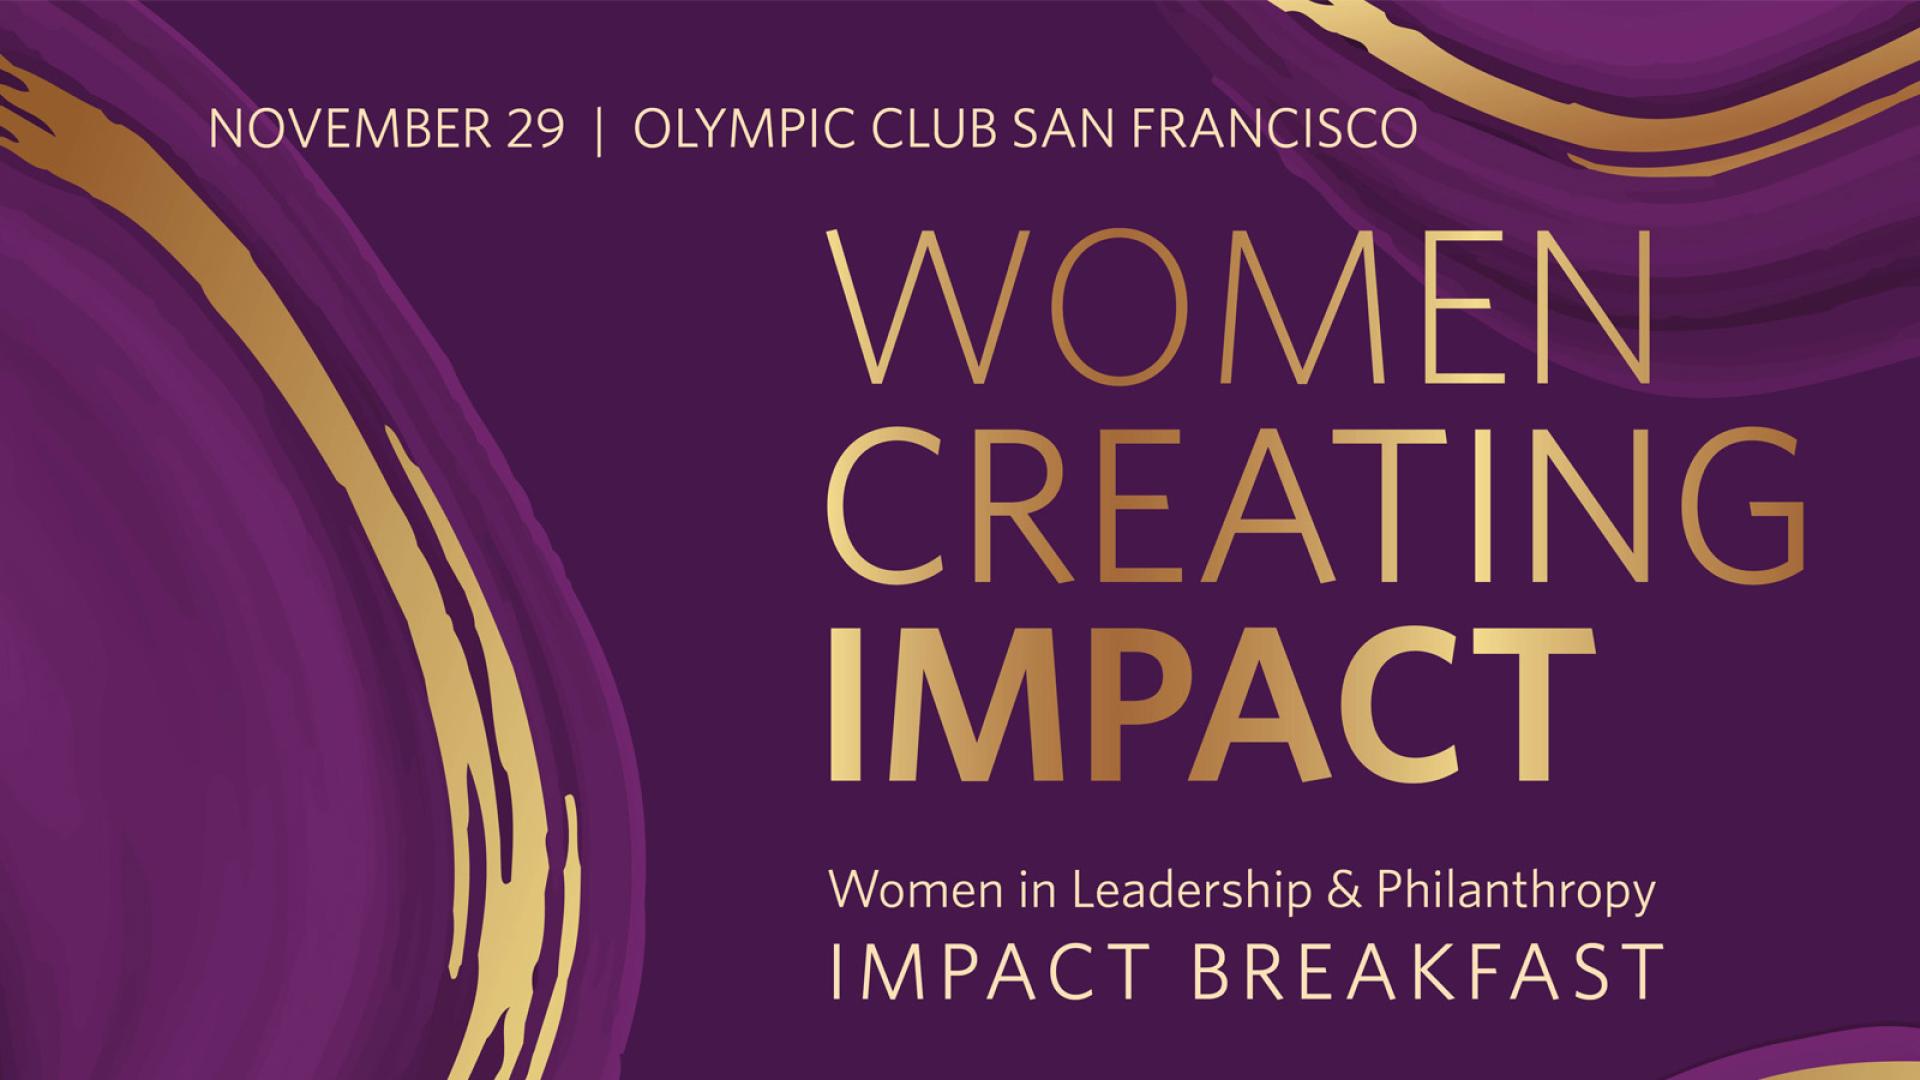 Women in Leadership & Philanthopy Impact Breakfast